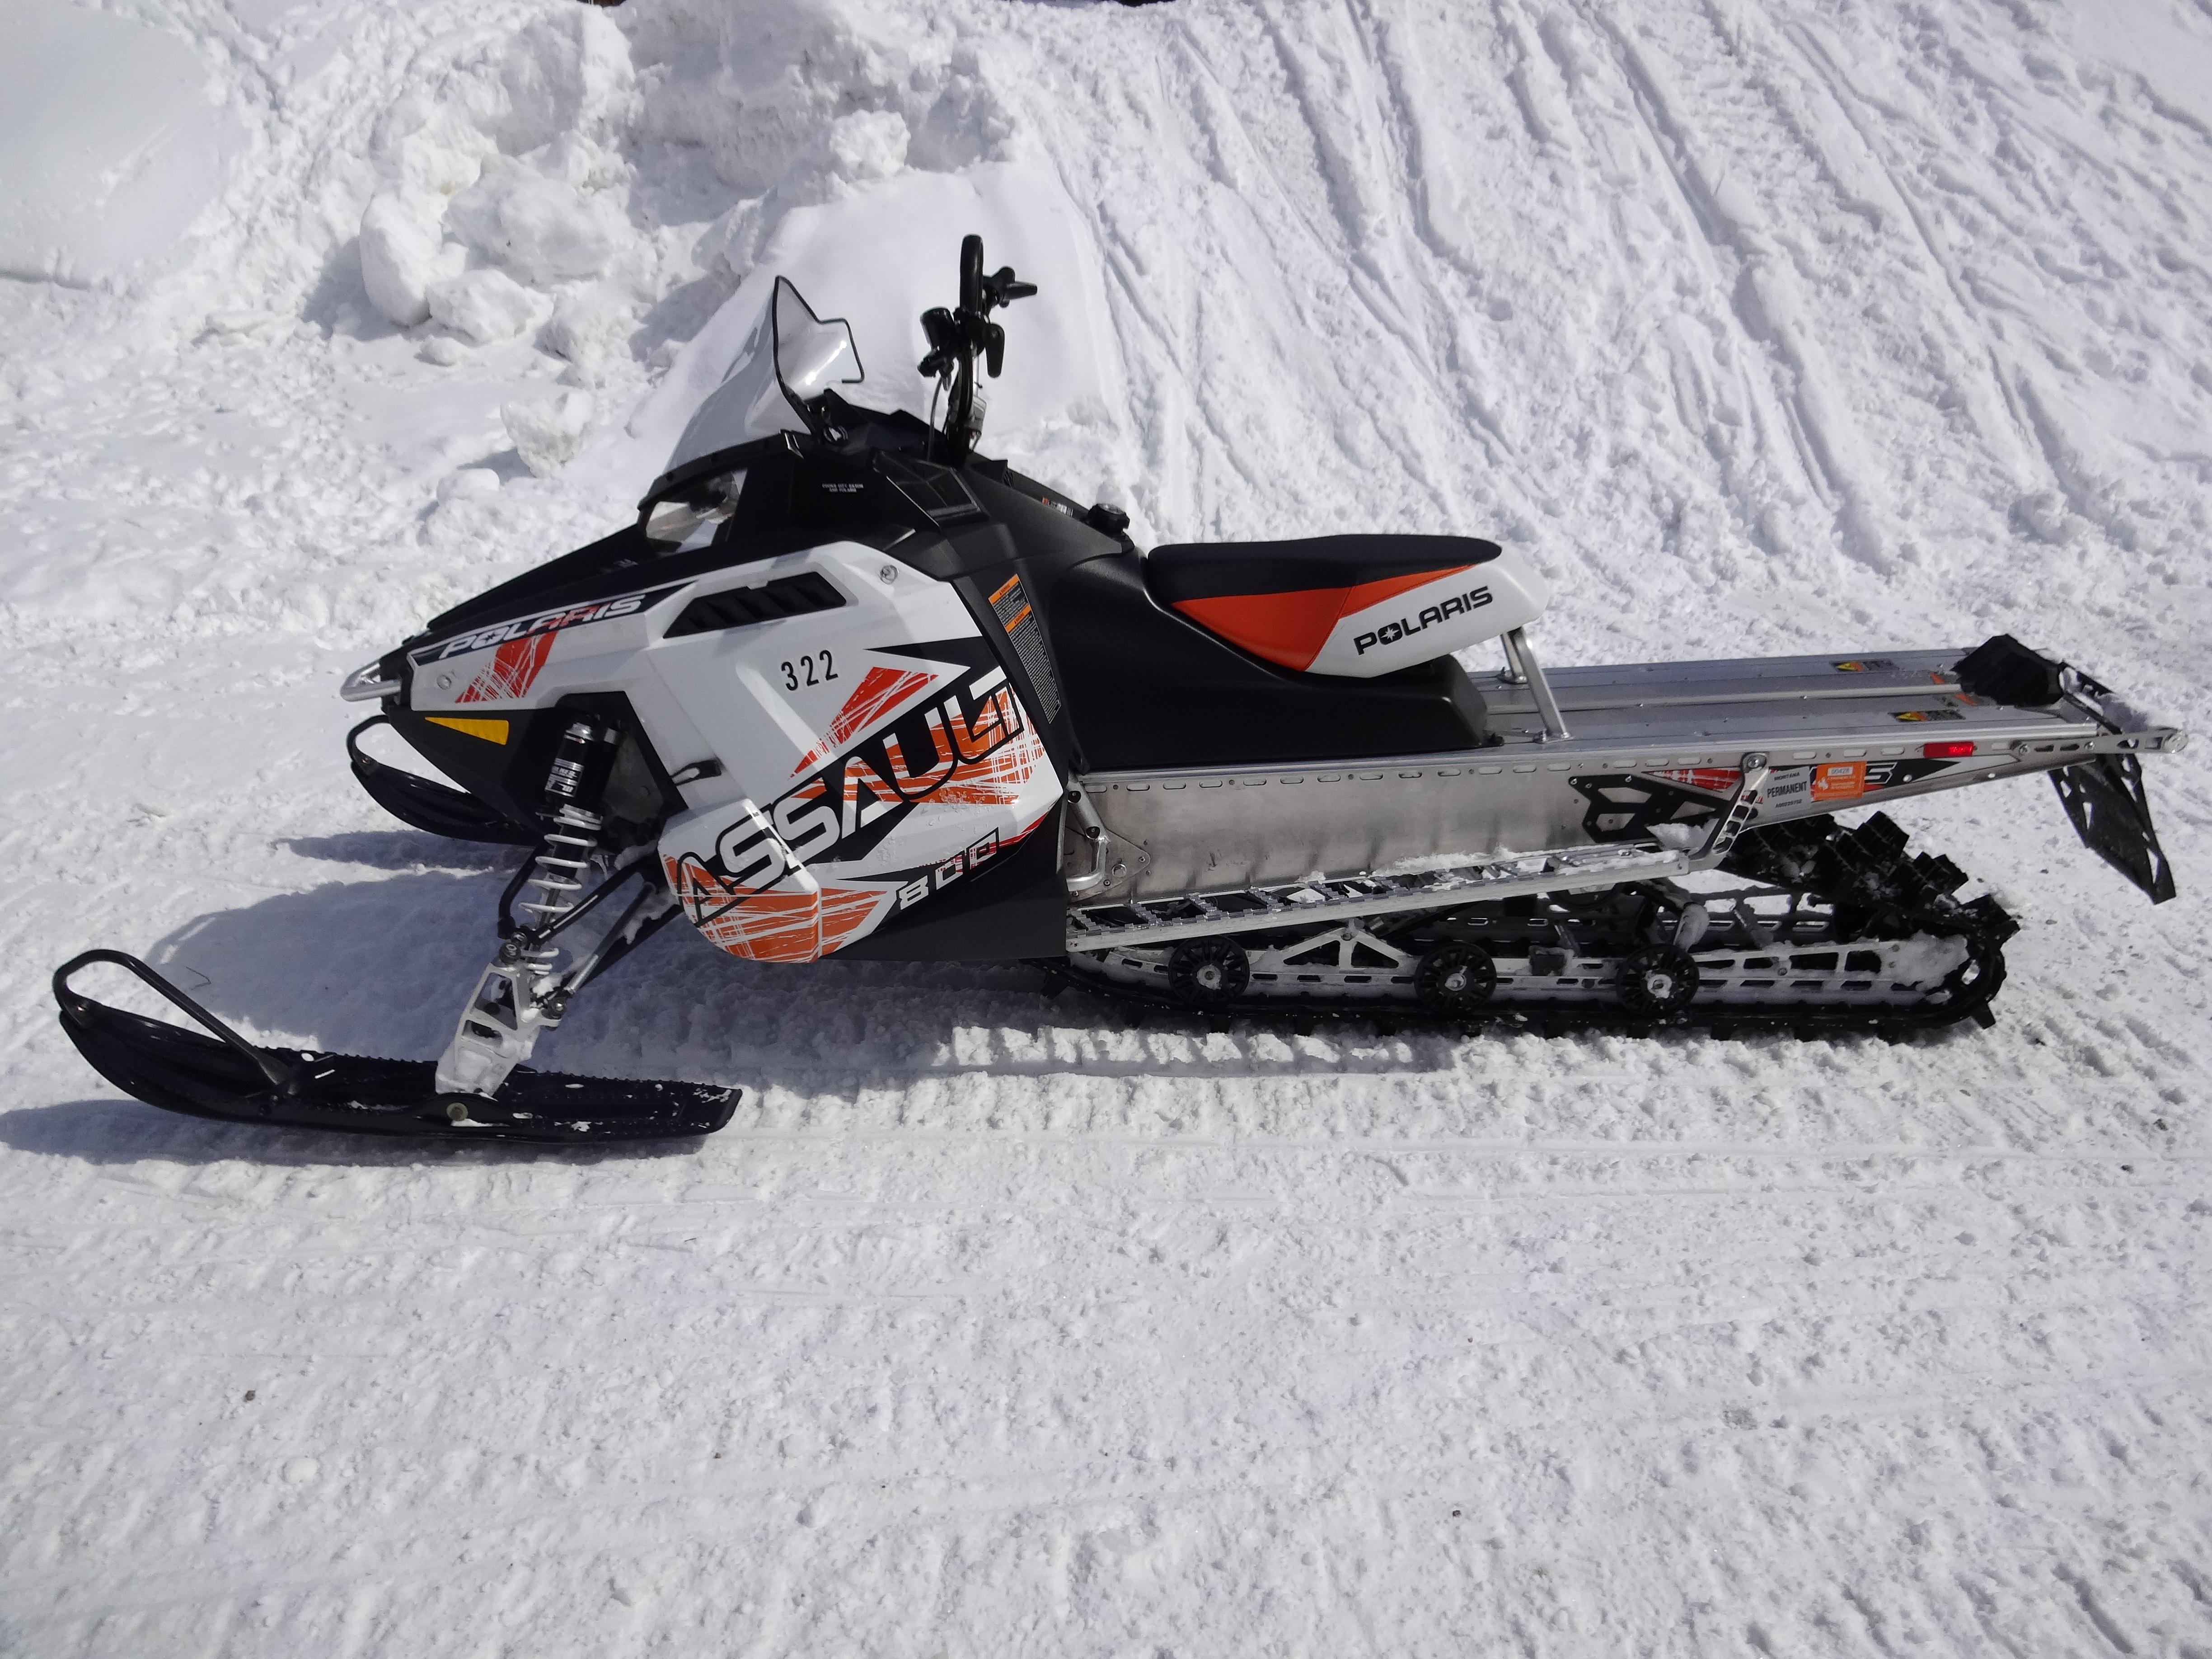 Free download POLARIS RMK ASSAULT snowmobile winter sled snow f